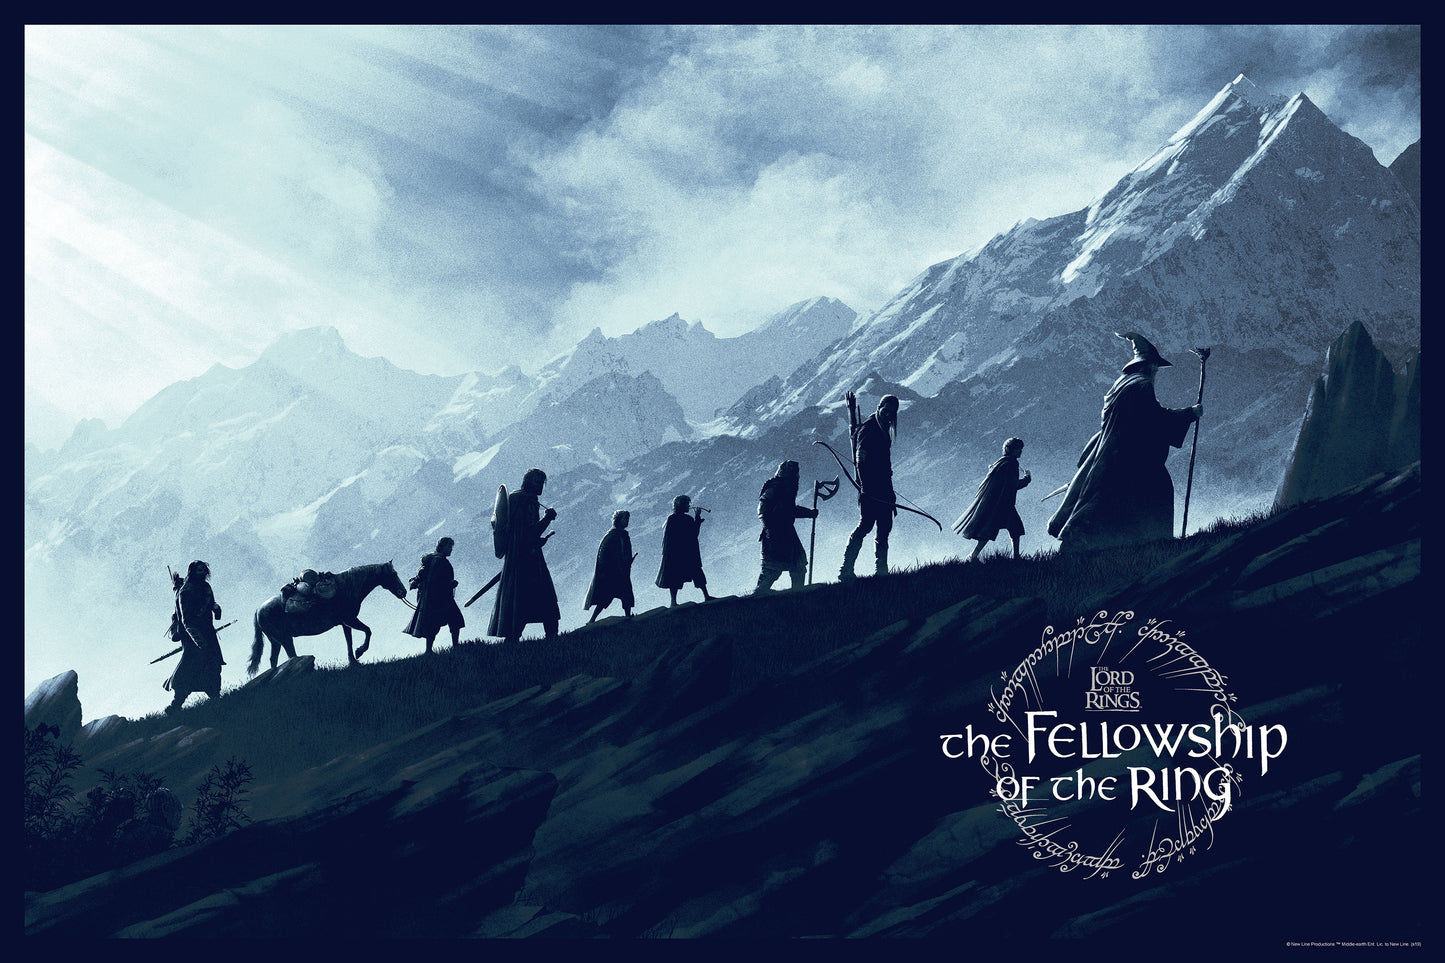 Matt Ferguson "The Lord of the Rings: The Fellowship of the Ring" Variant